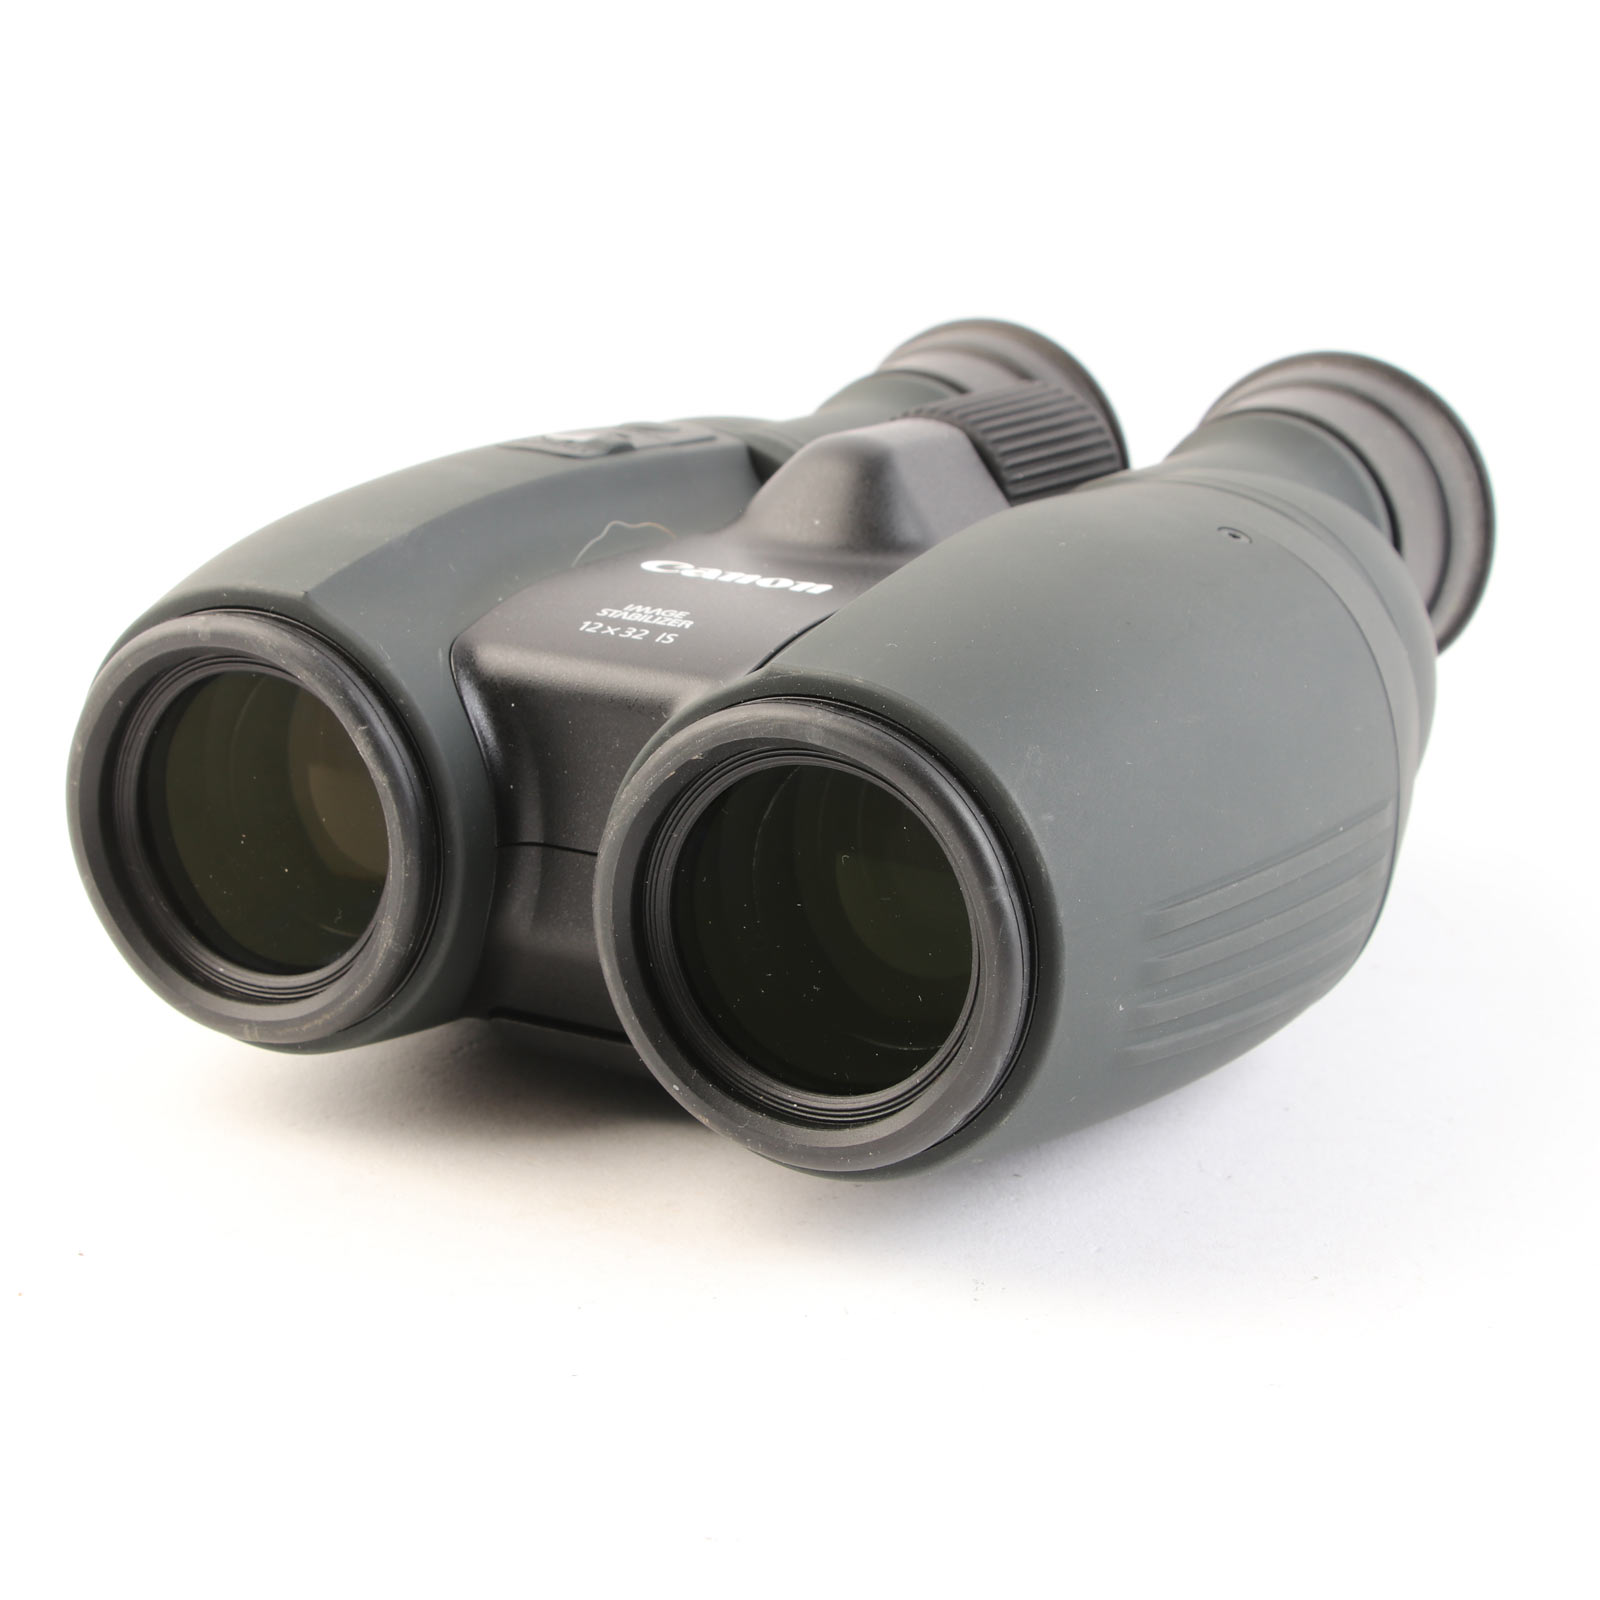 USED Canon 12x32 IS Binoculars